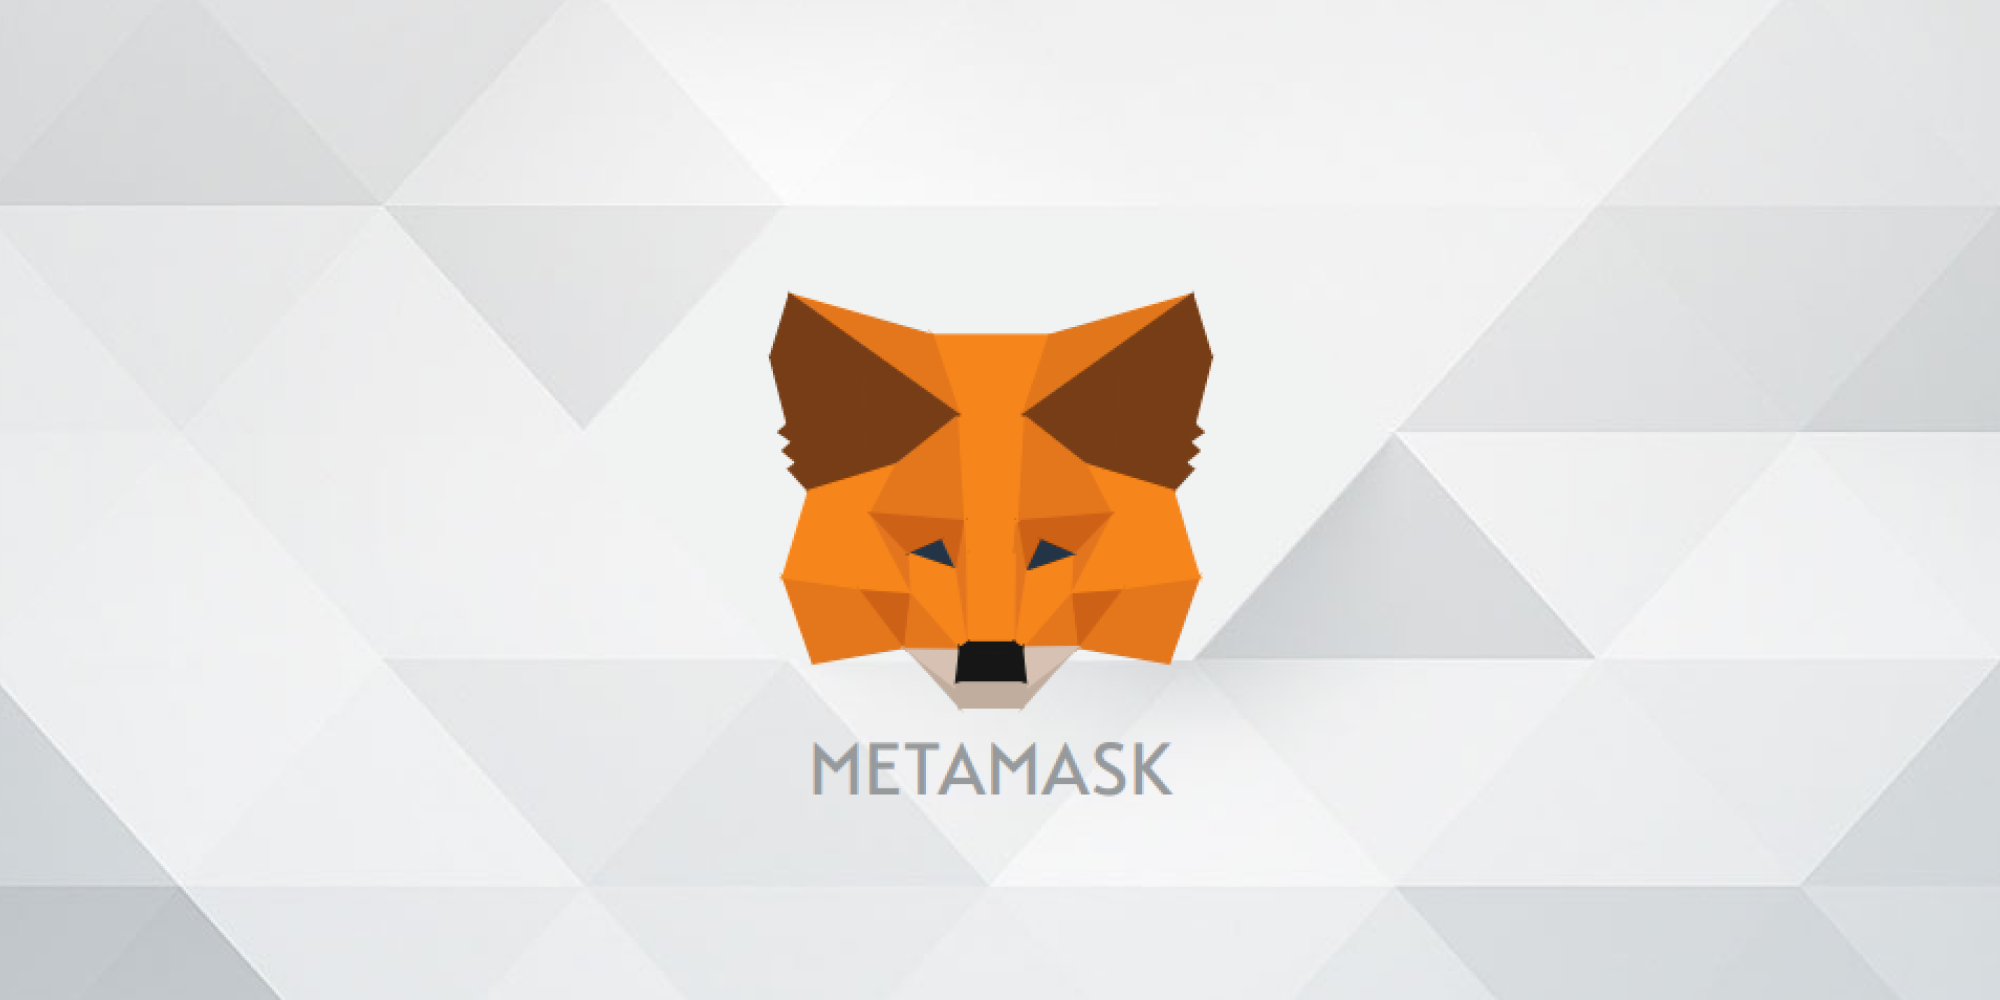 about metamask